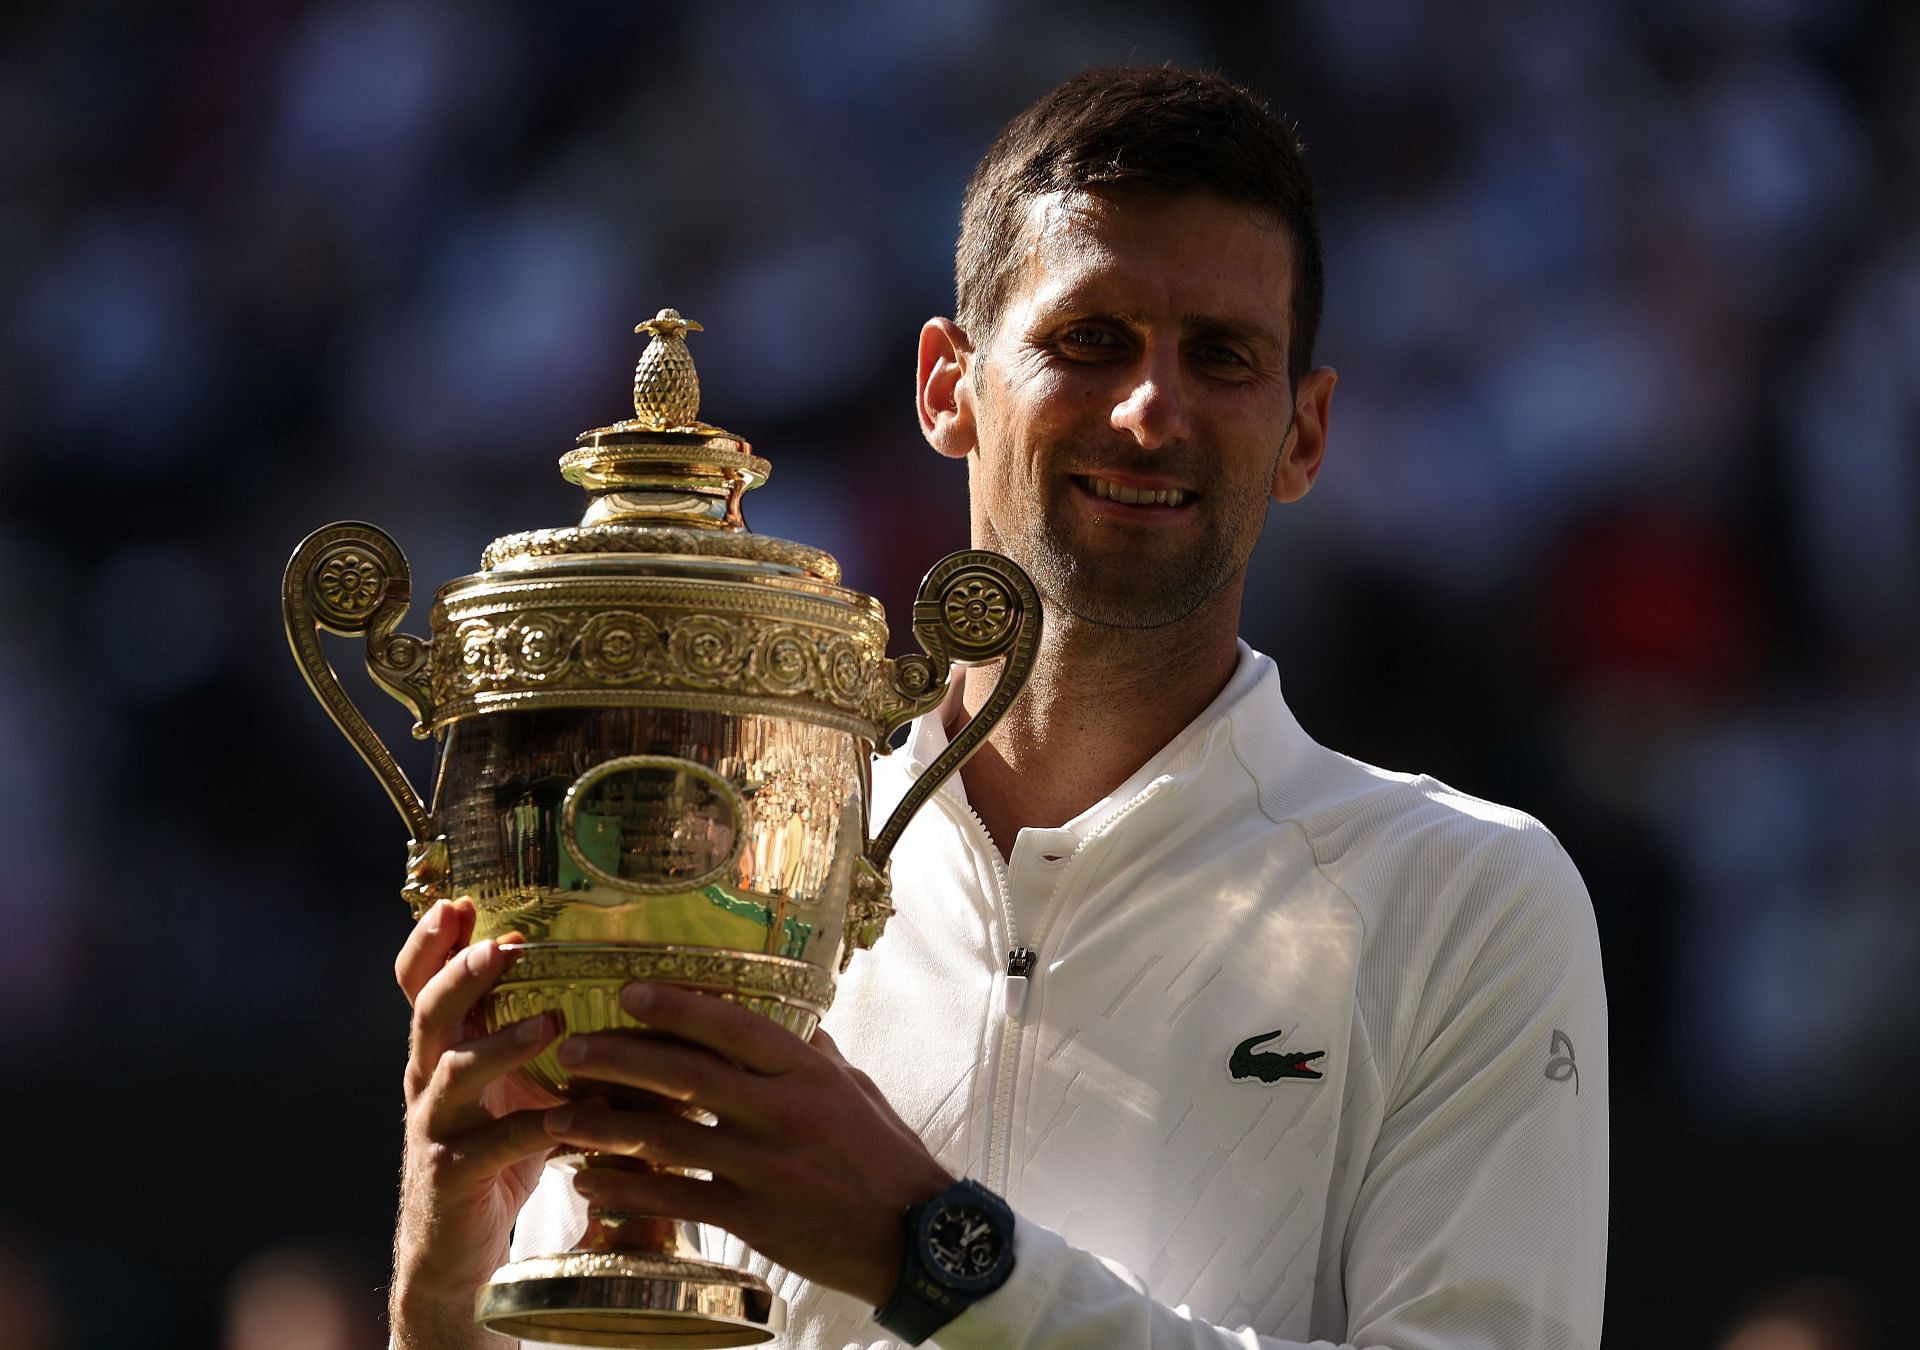 Djokovic on Day 14: The Championships - Wimbledon 2022